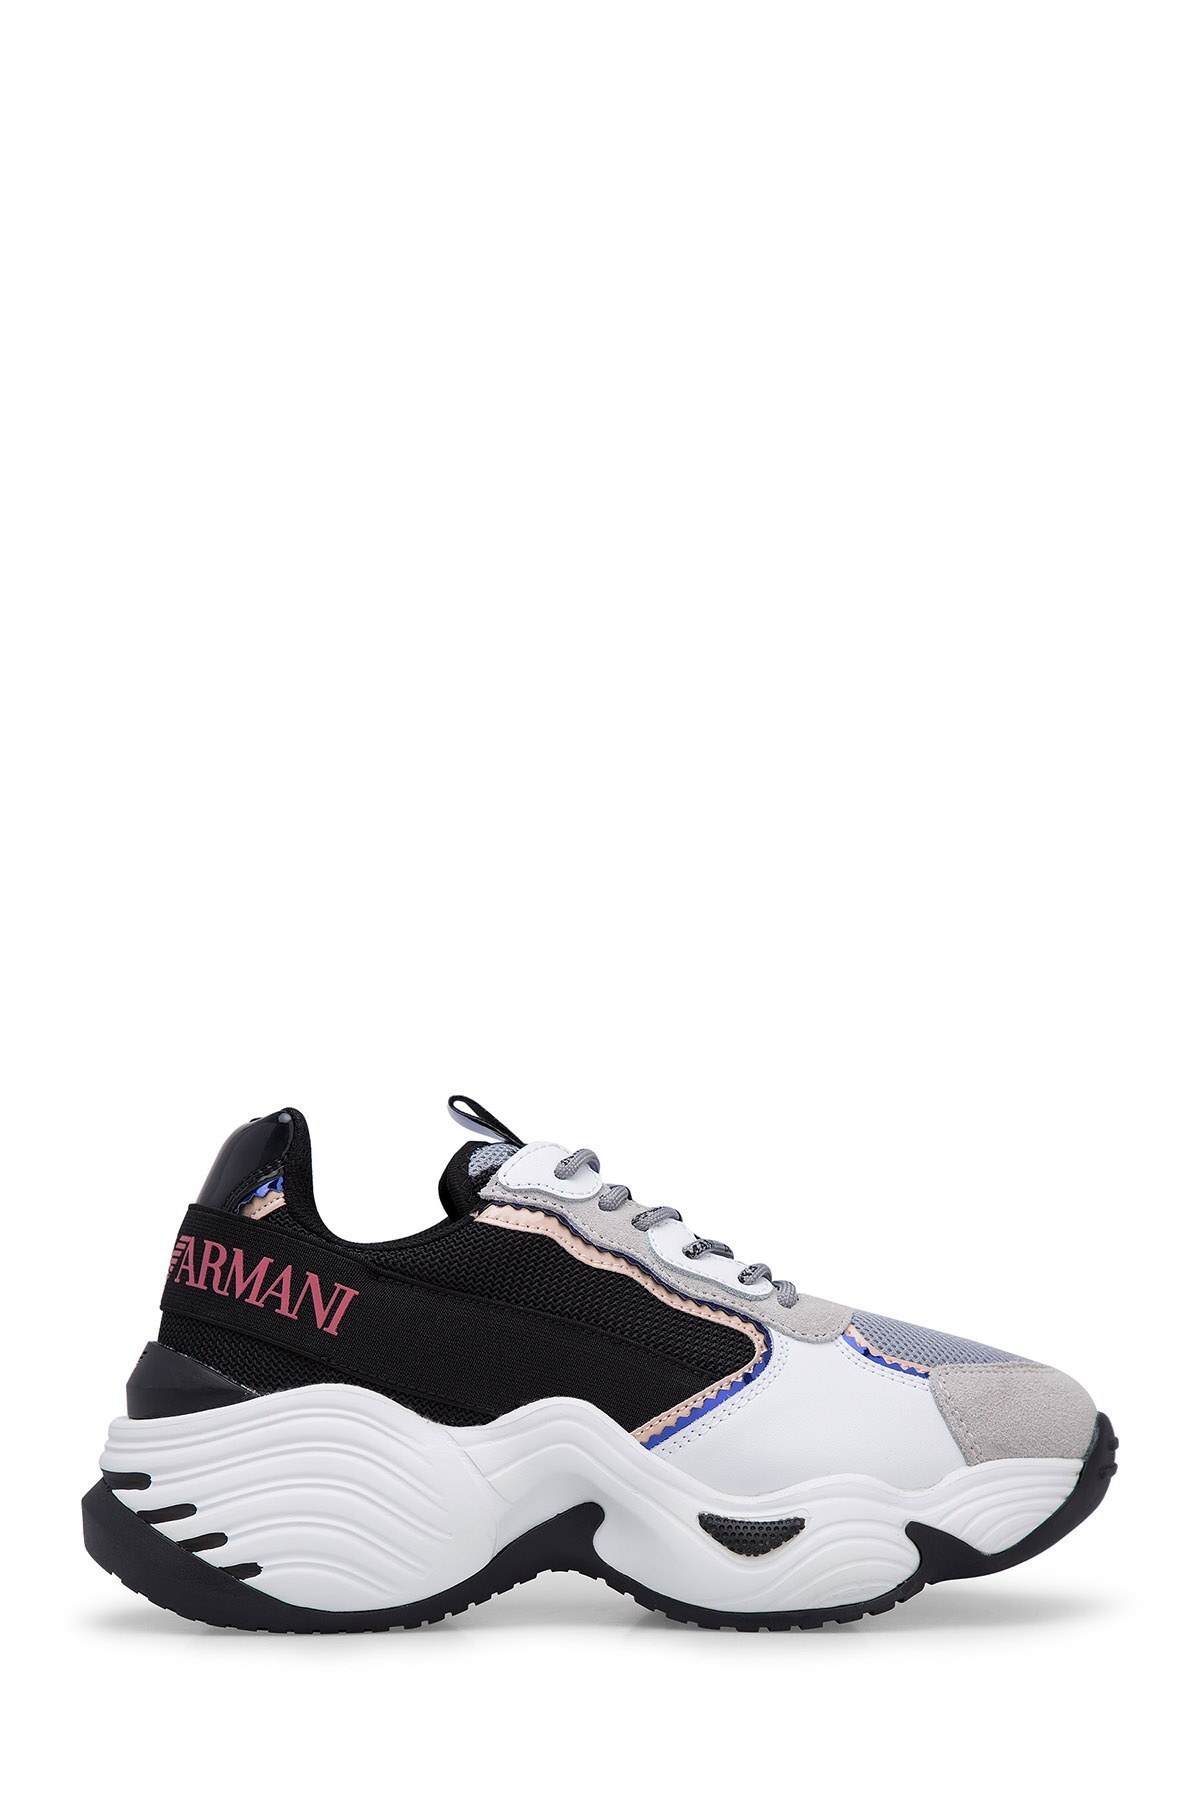 Emporio Armani Kadın Ayakkabı S X3X088 XM059 R539 BEYAZ